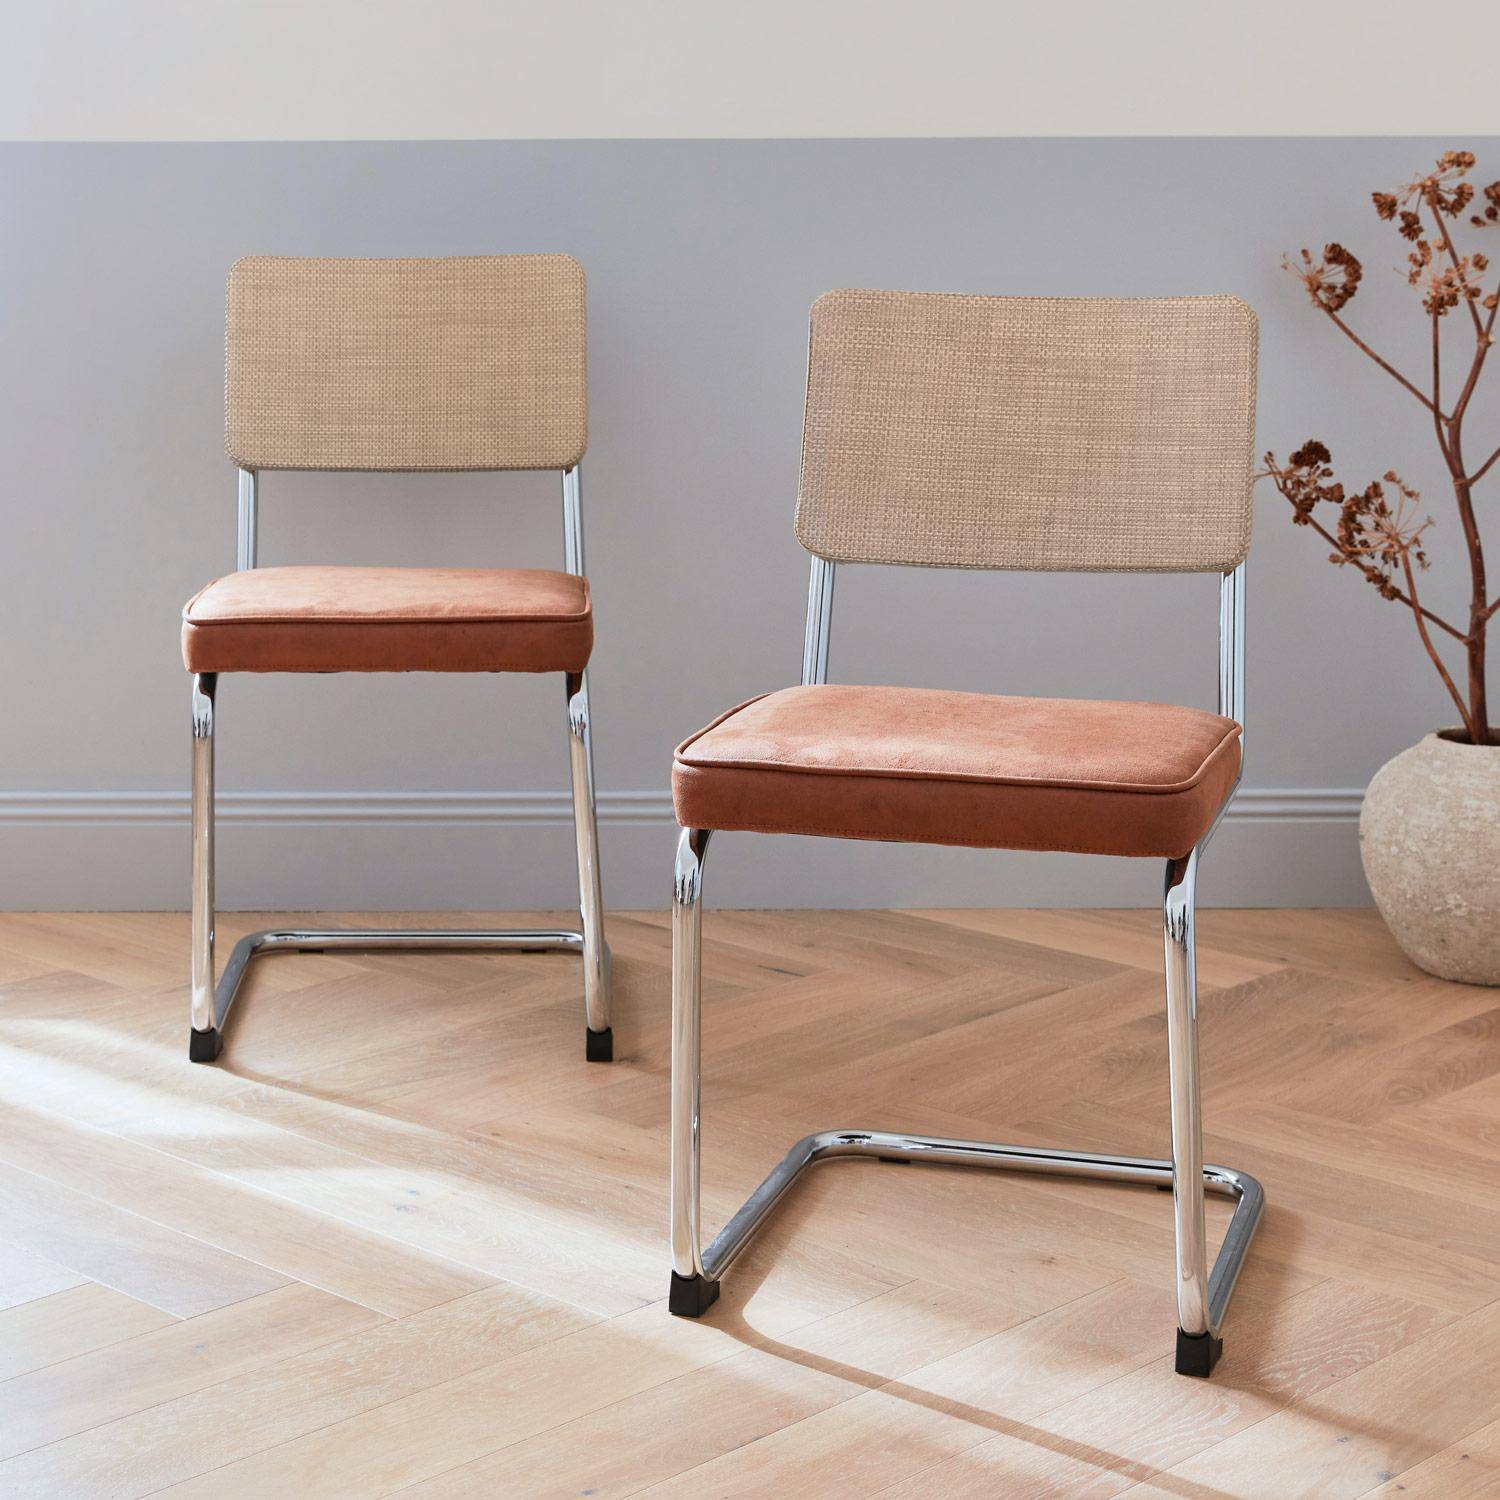 2 sillas cantilever - Maja - tela marrón claro y resina efecto ratán, 46 x 54,5 x 84,5cm  ,sweeek,Photo2